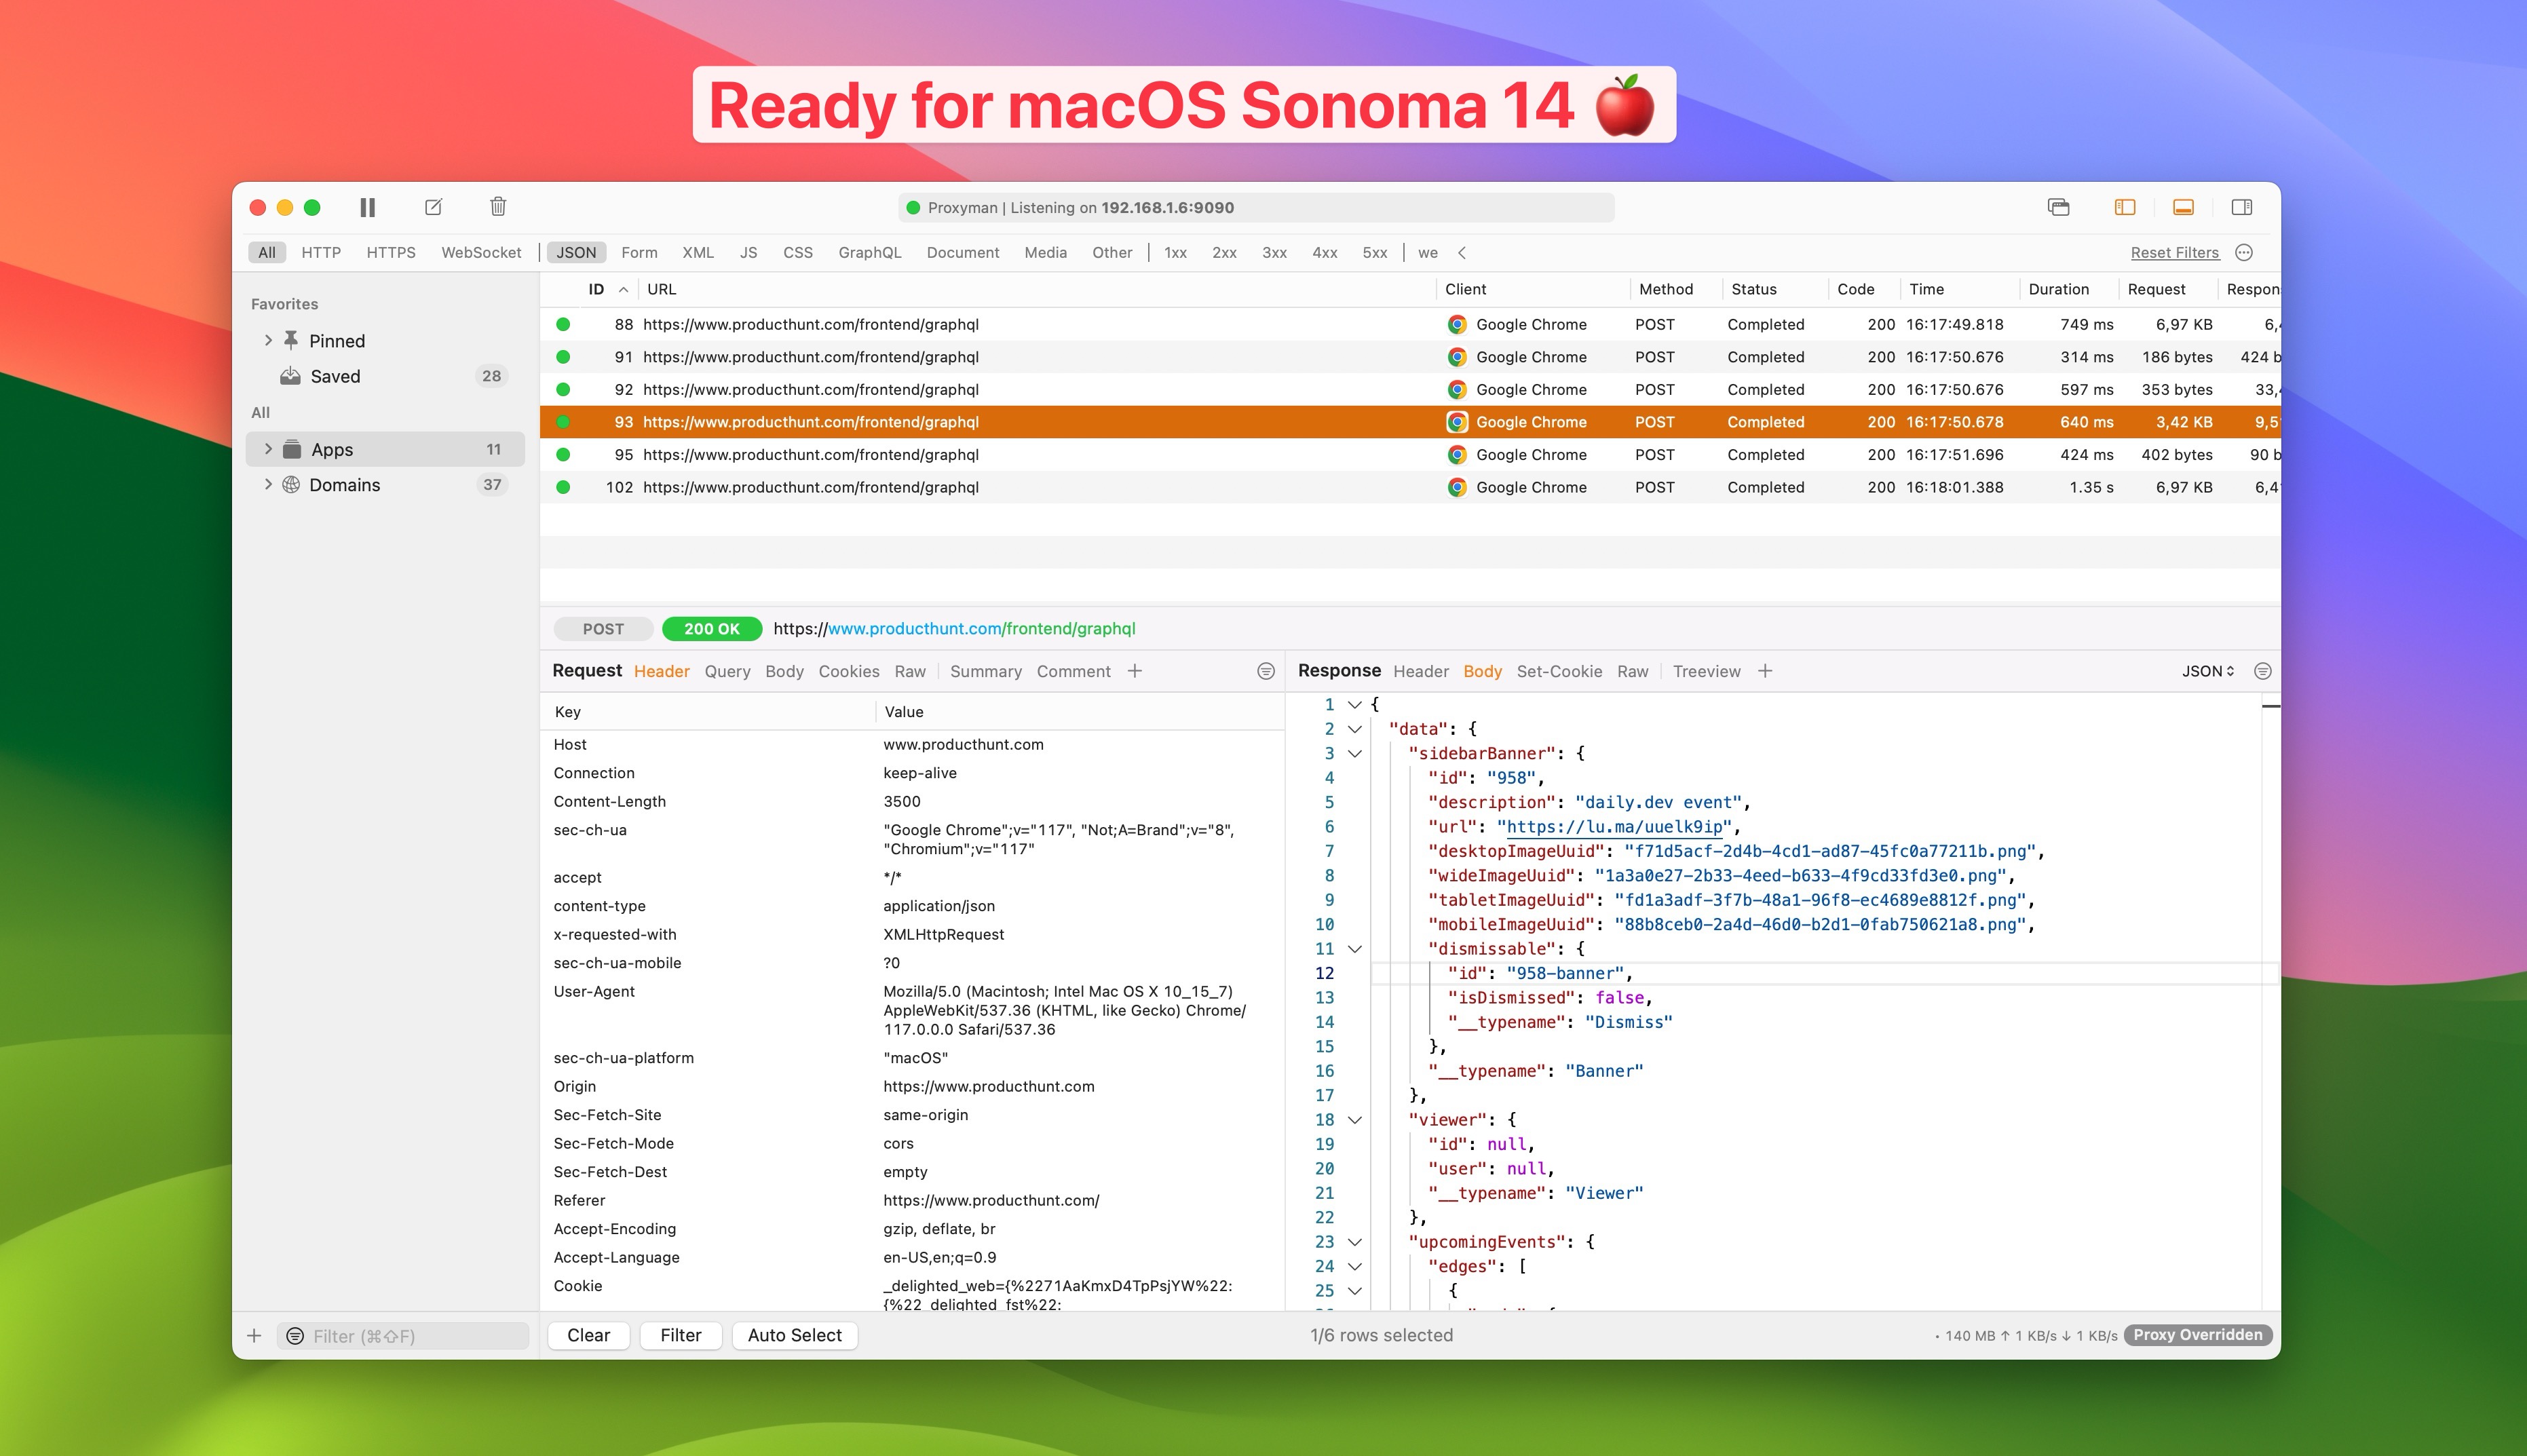 Proxyman app on macOS Sonoma 14